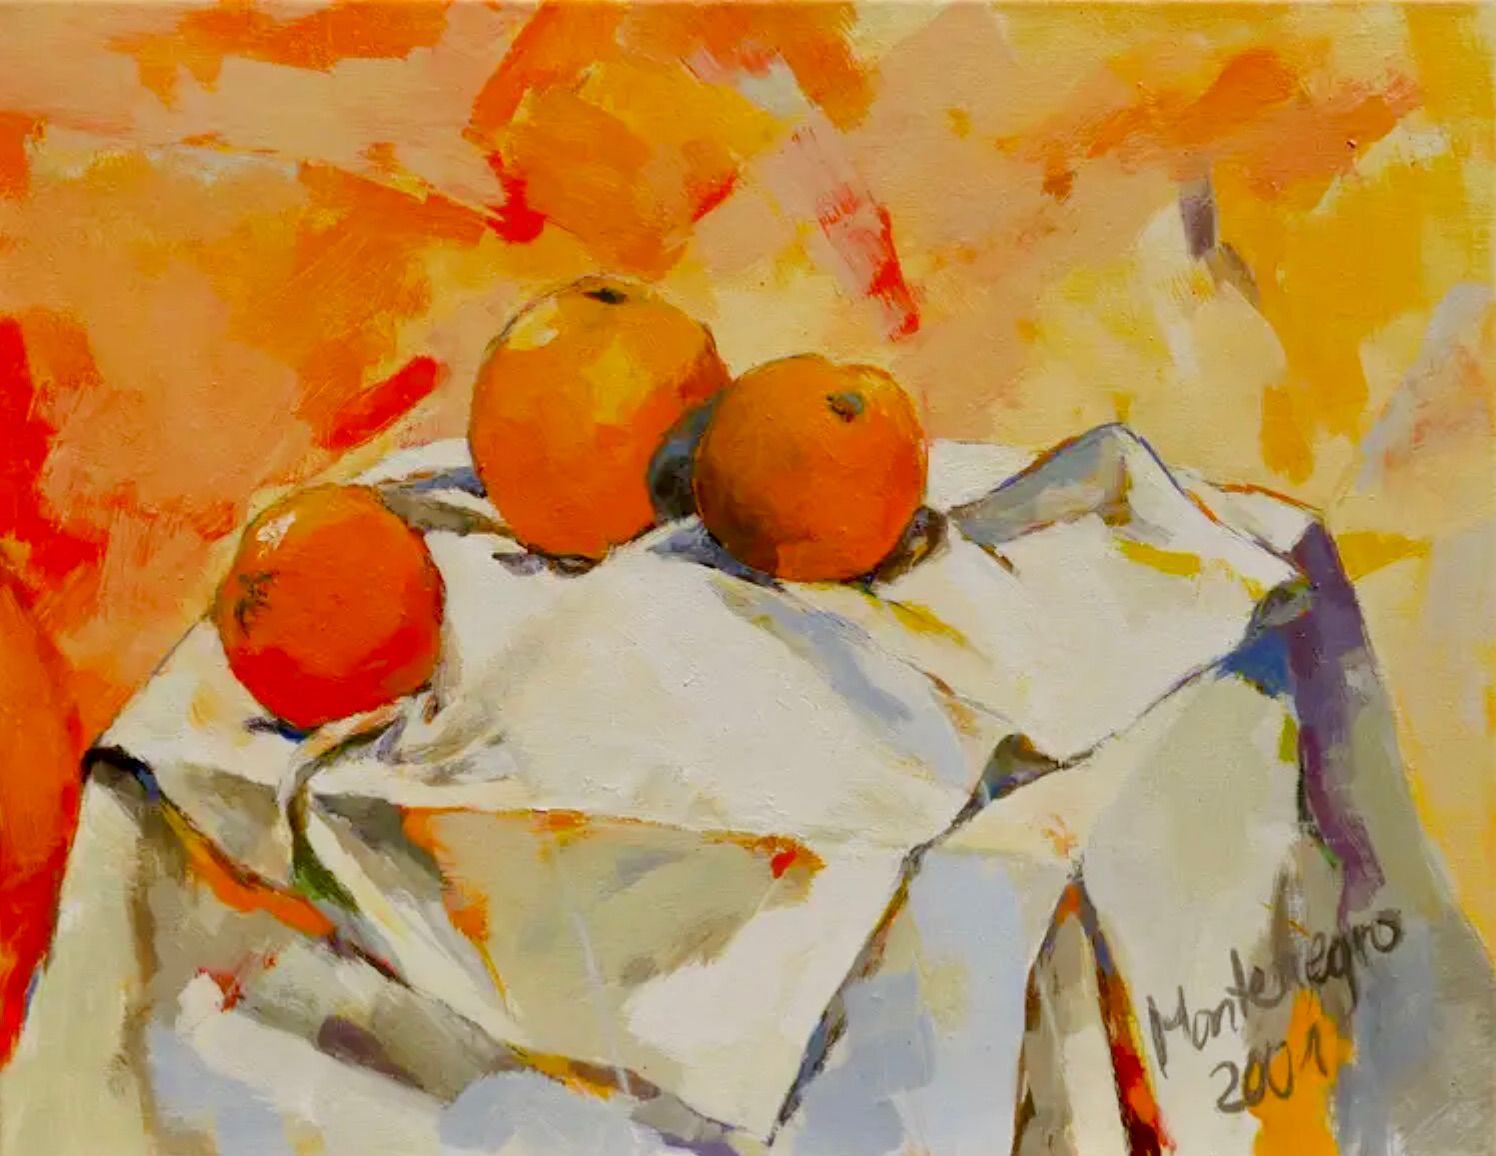 Miriam Montenegro pintura expresionista naranja sobre tela blanca